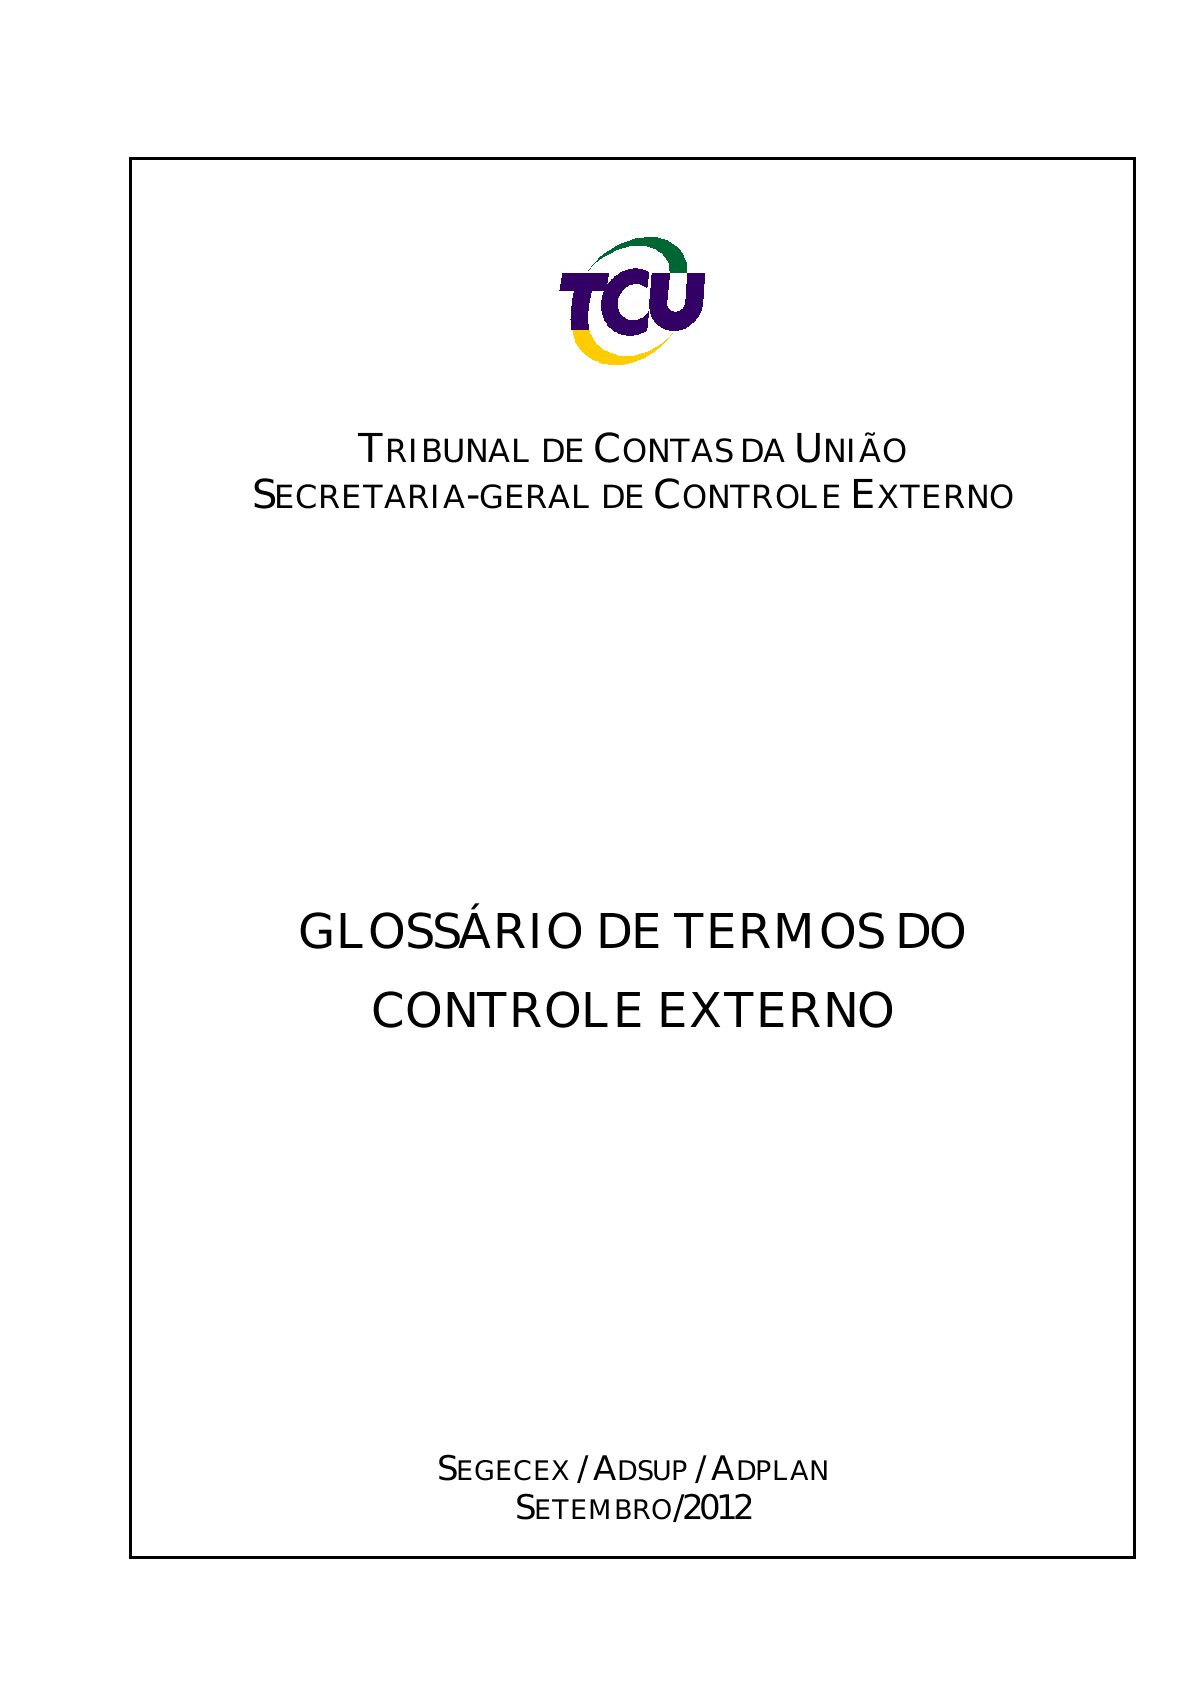 glossario_termos_ce.png